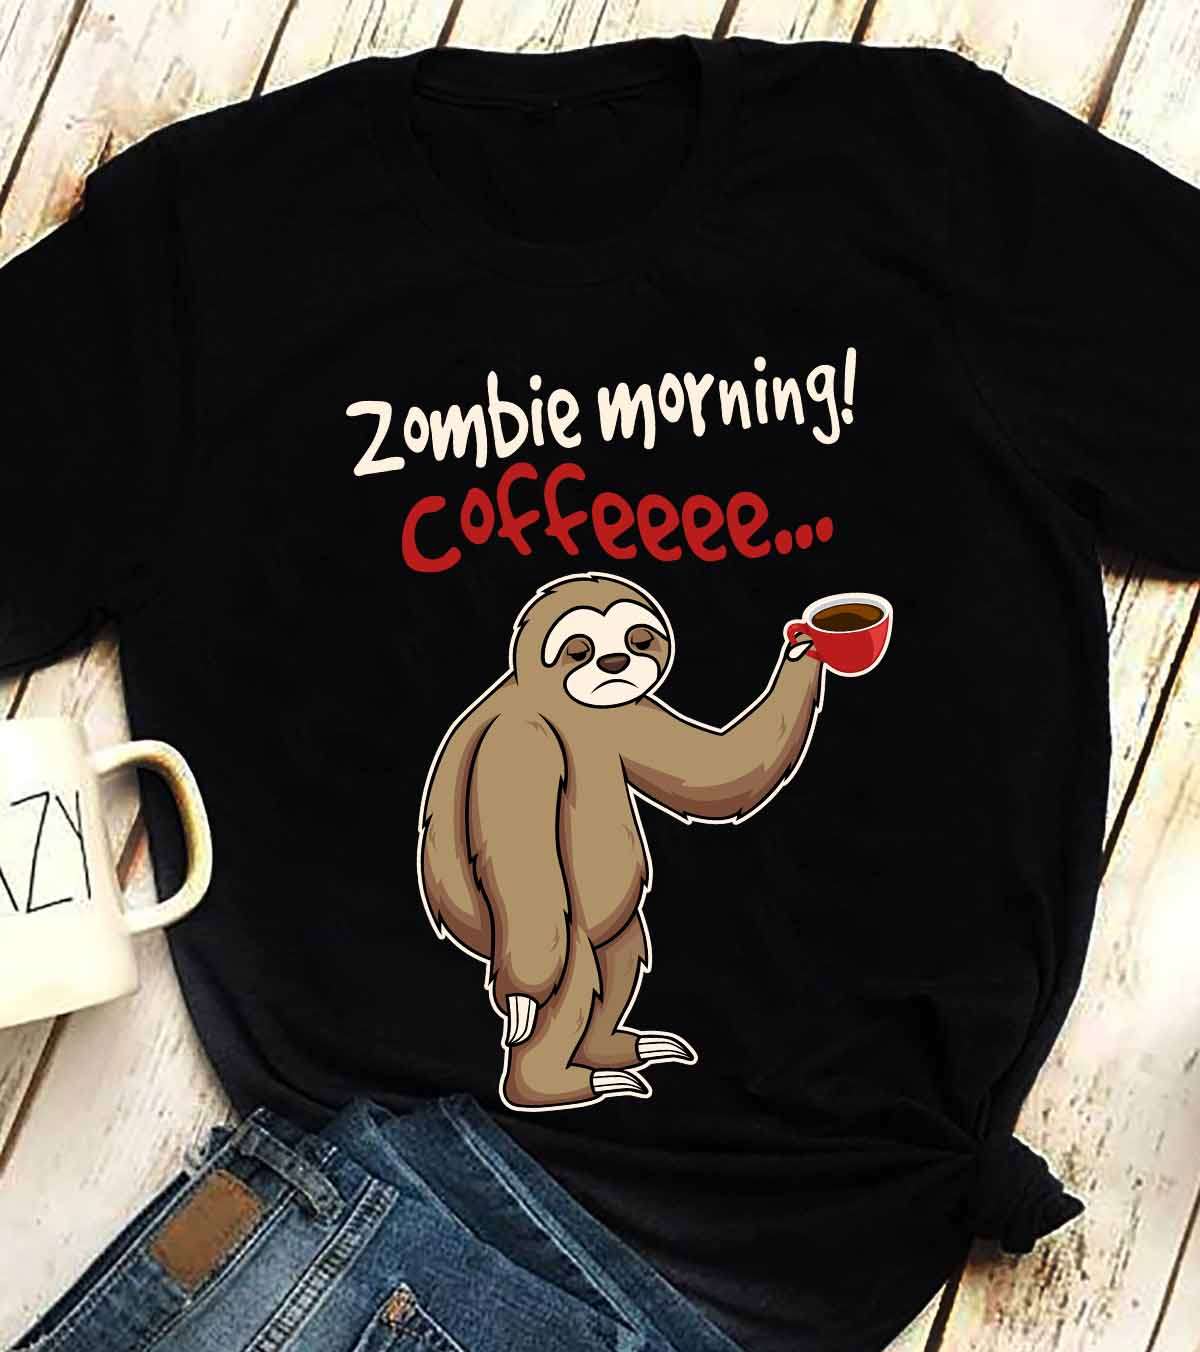 Zombie morning! coffeee... - Sloth need coffee, coffee lover